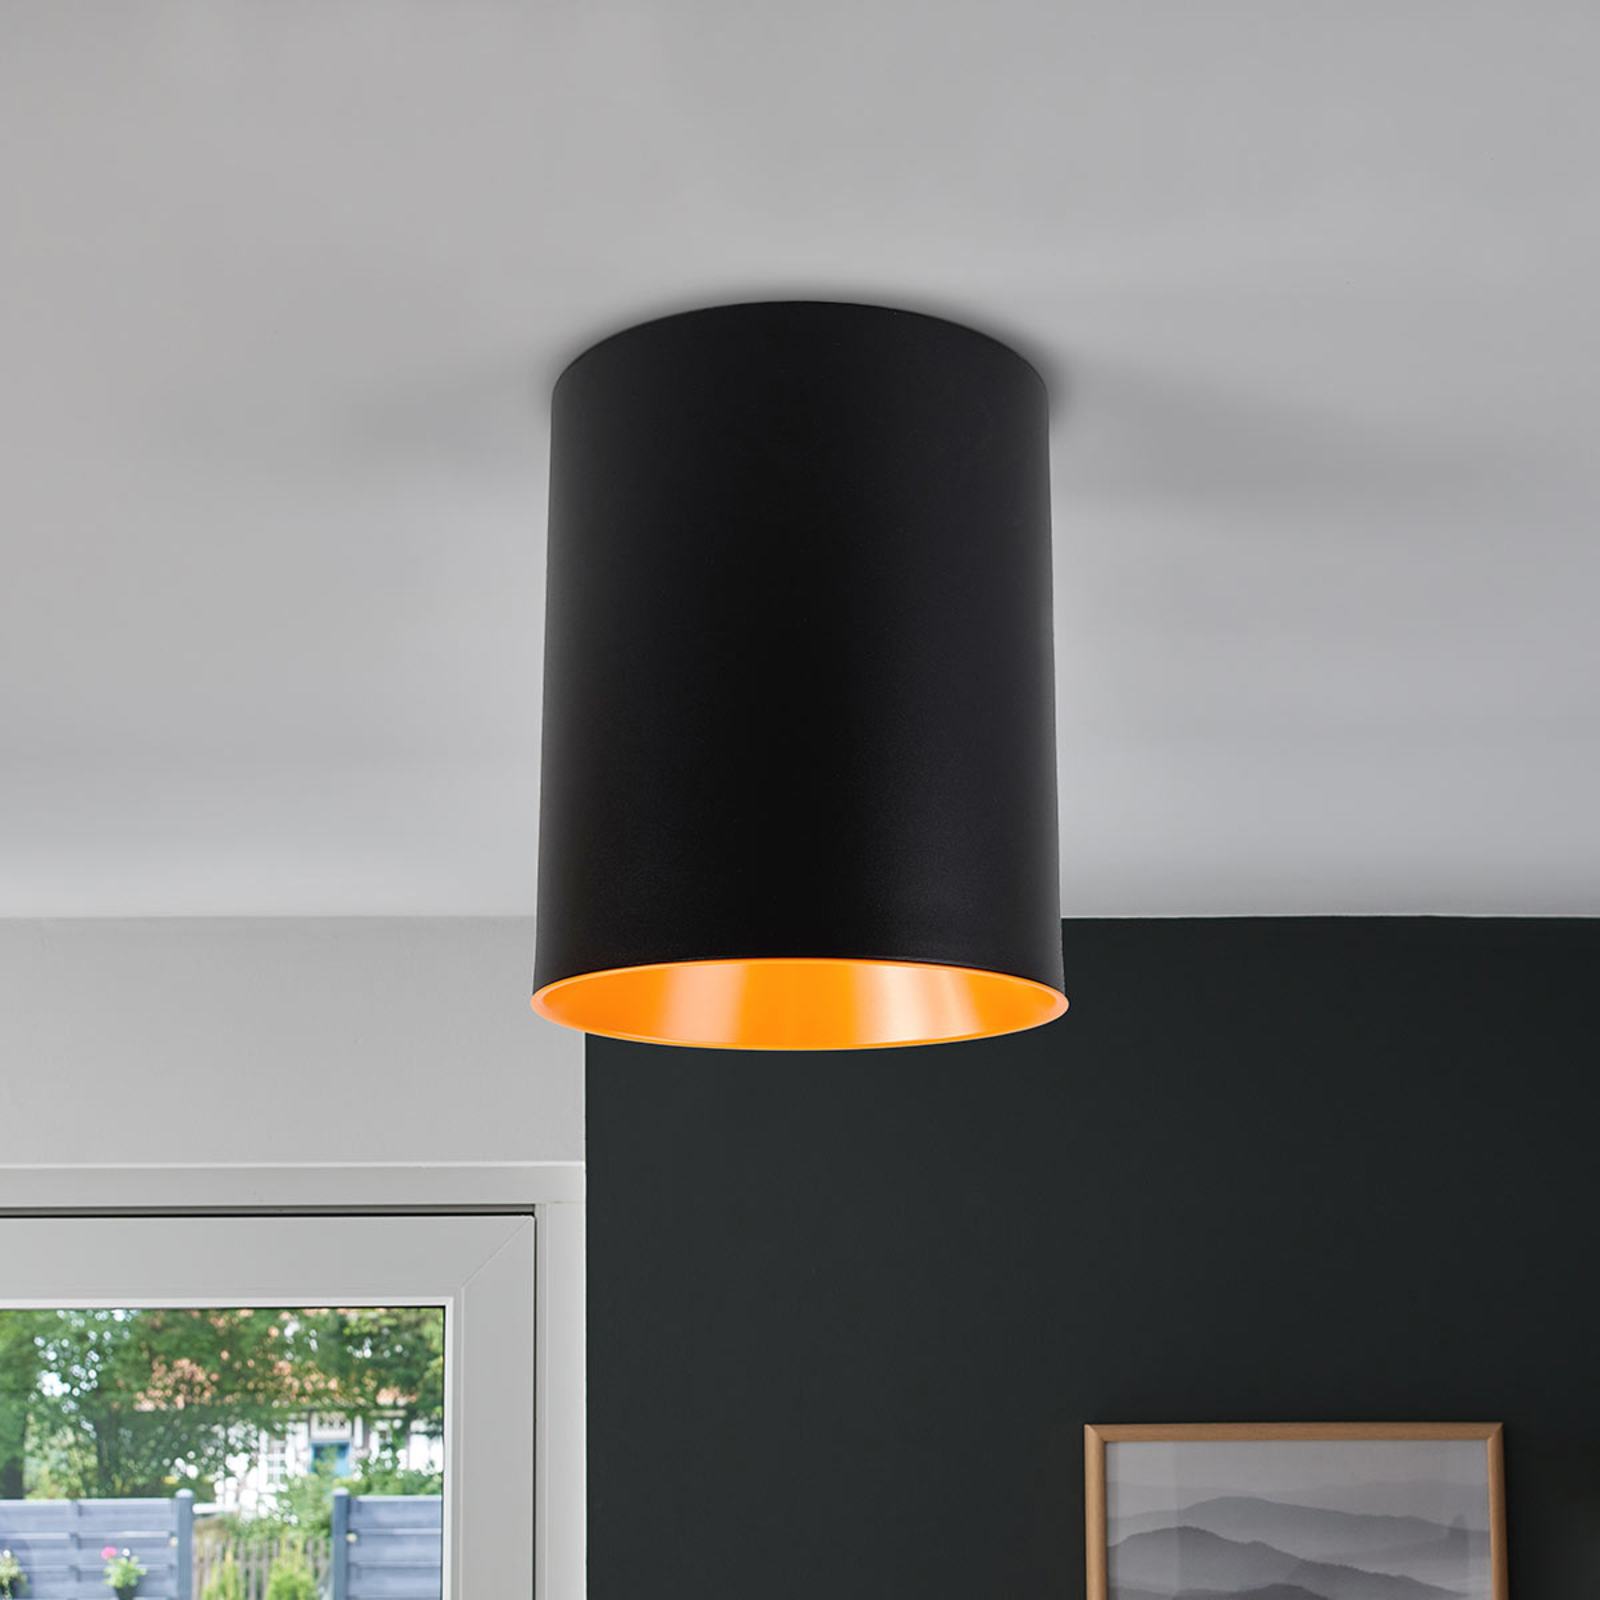 LED design plafondlamp Tagora in cilindrische vorm